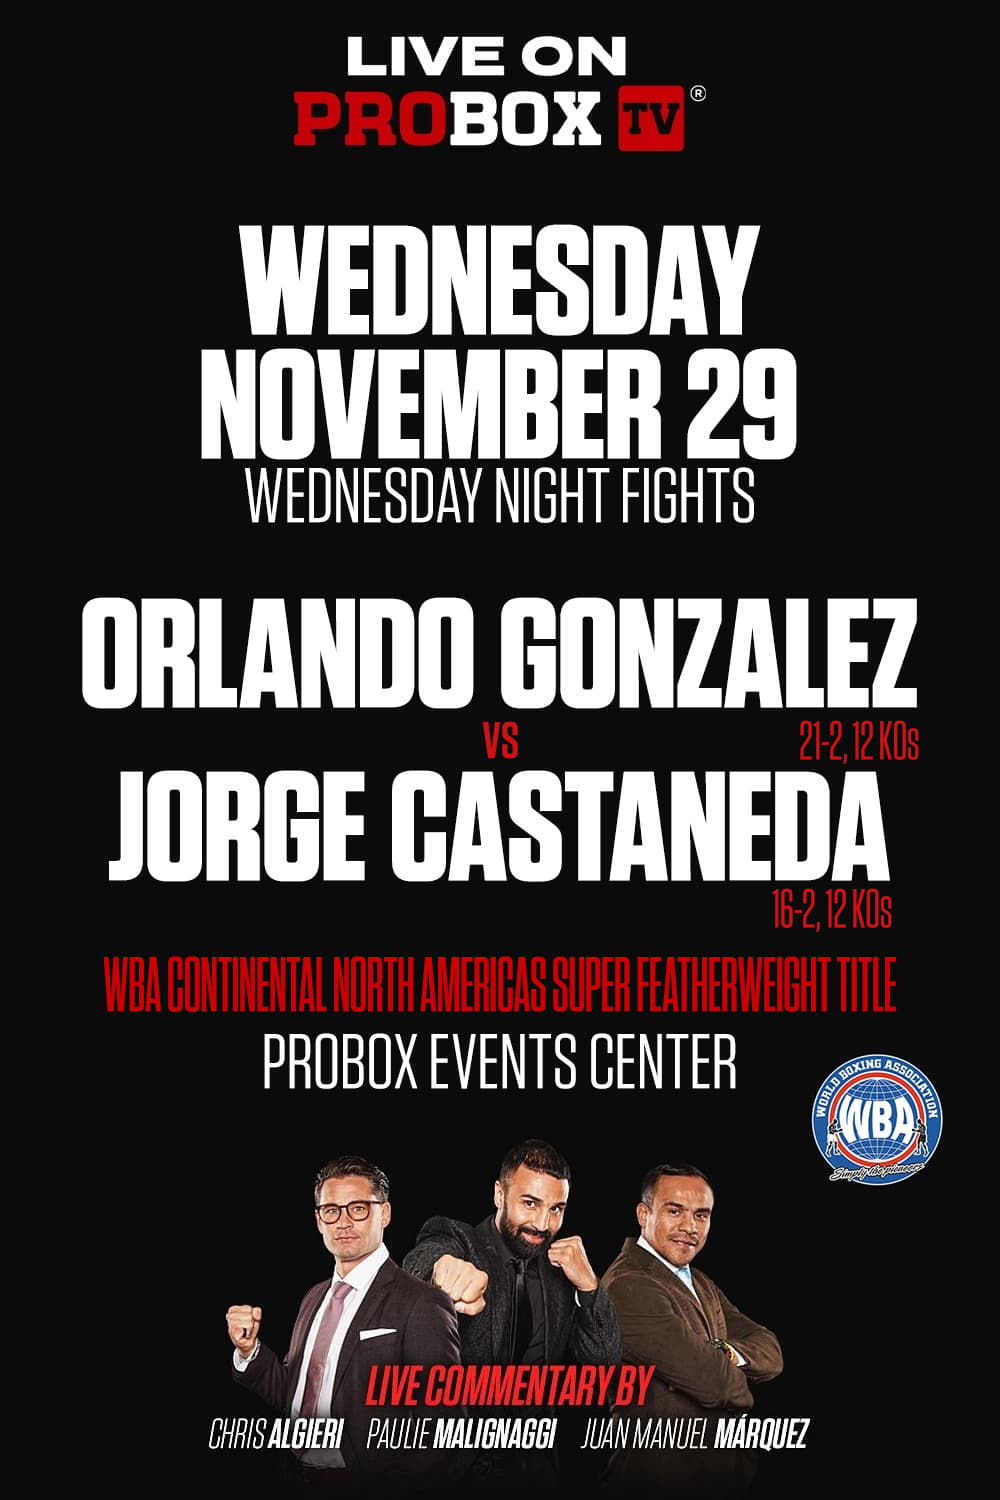 Orlando Gonzalez vs. Jorge Castaneda